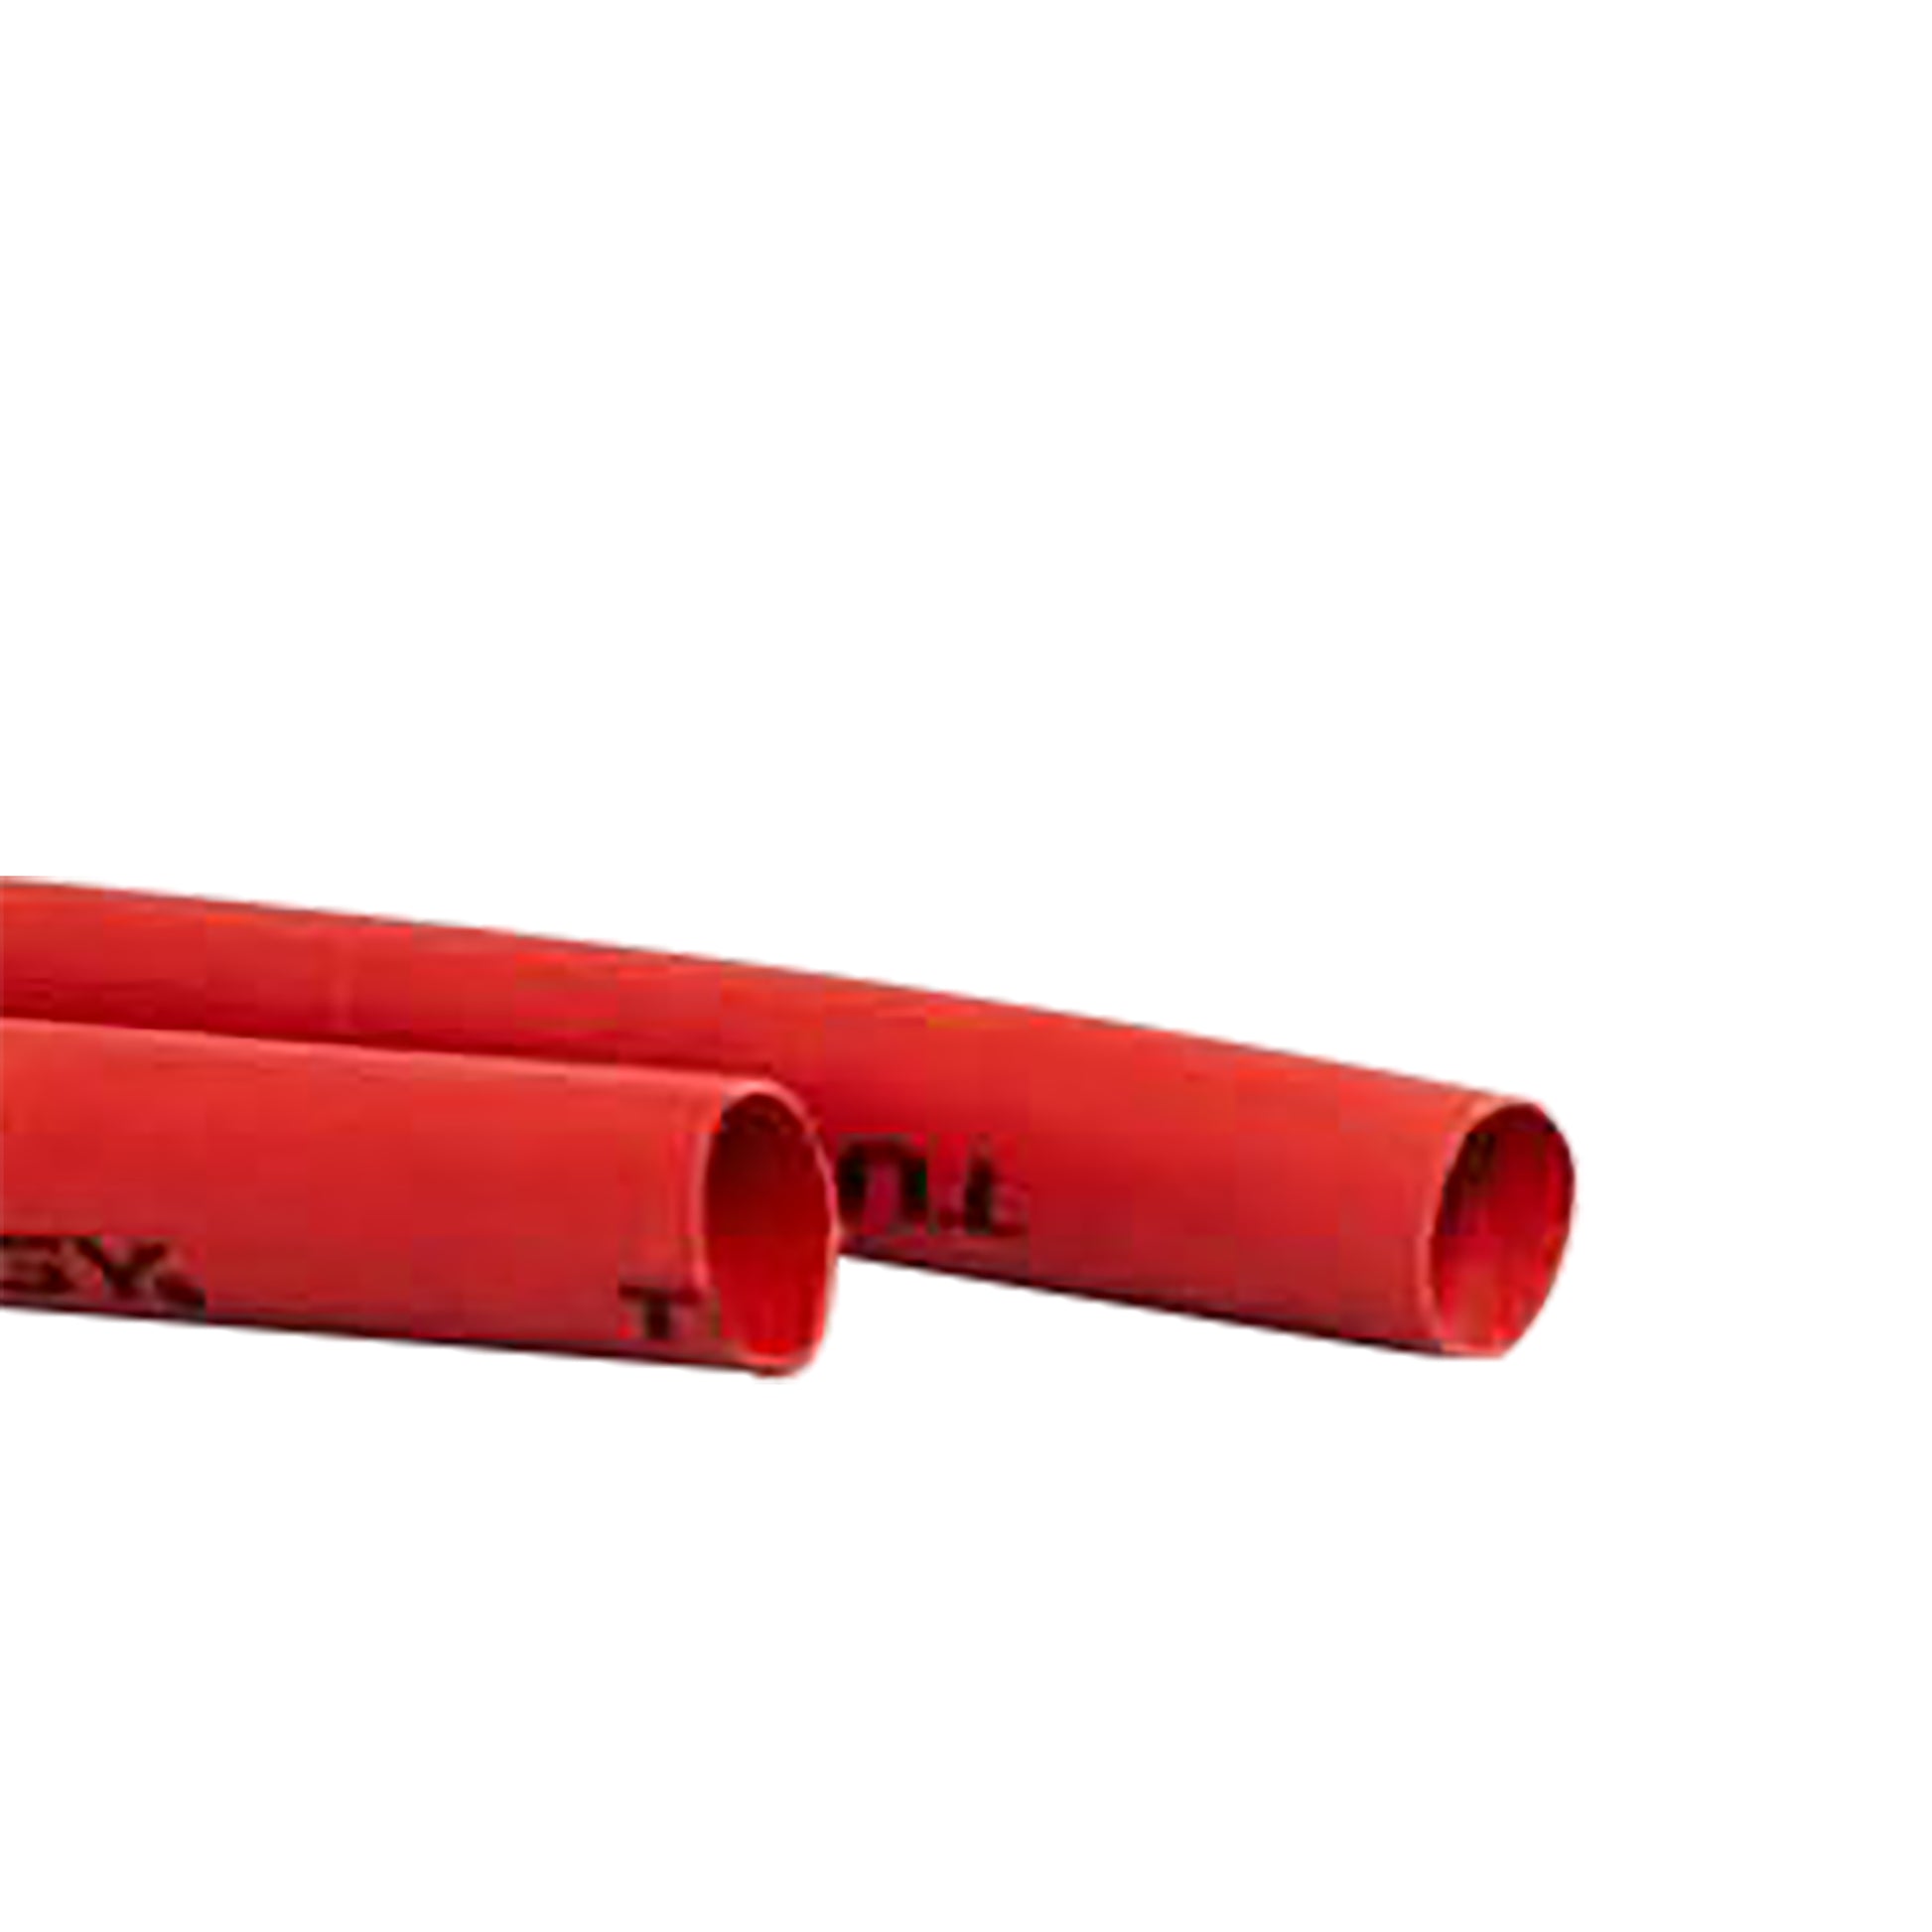 Flexible Thin Single Wall Non-Adhesive Heat Shrink Tubing 2:1 Red 1/8" ID - 25' Ft Spool